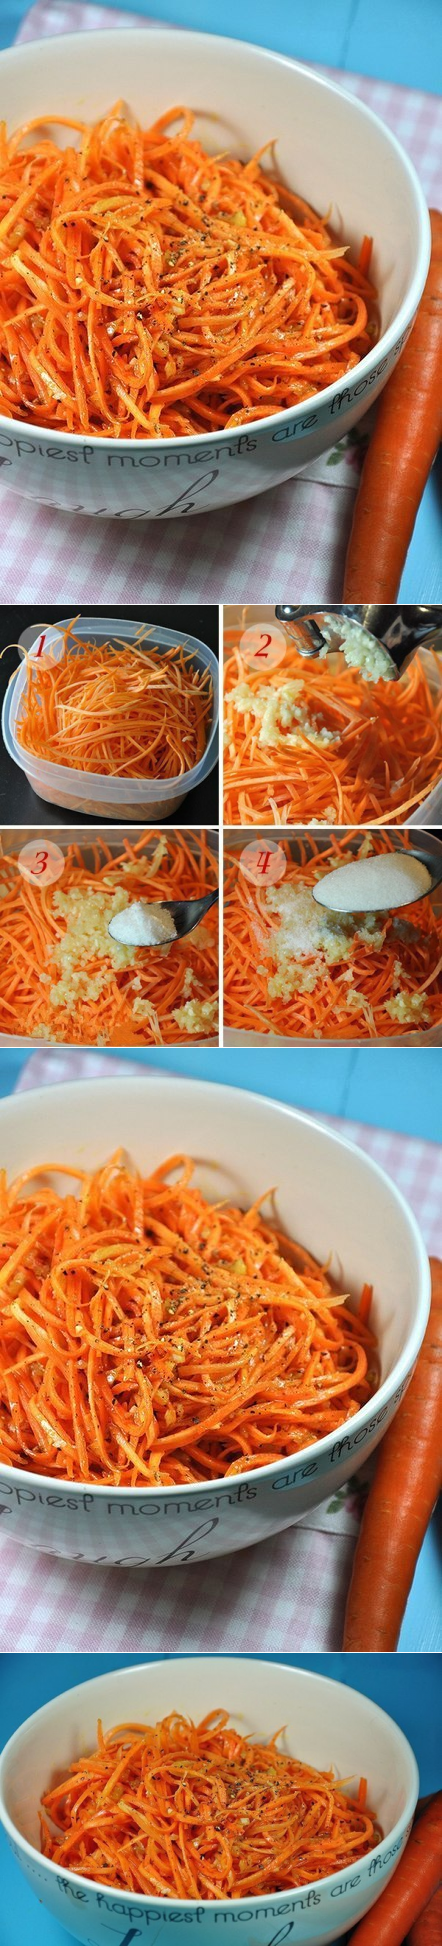 Морковь по-корейски (62 рецепта с фото) - рецепты с фотографиями на поварёнок.ру